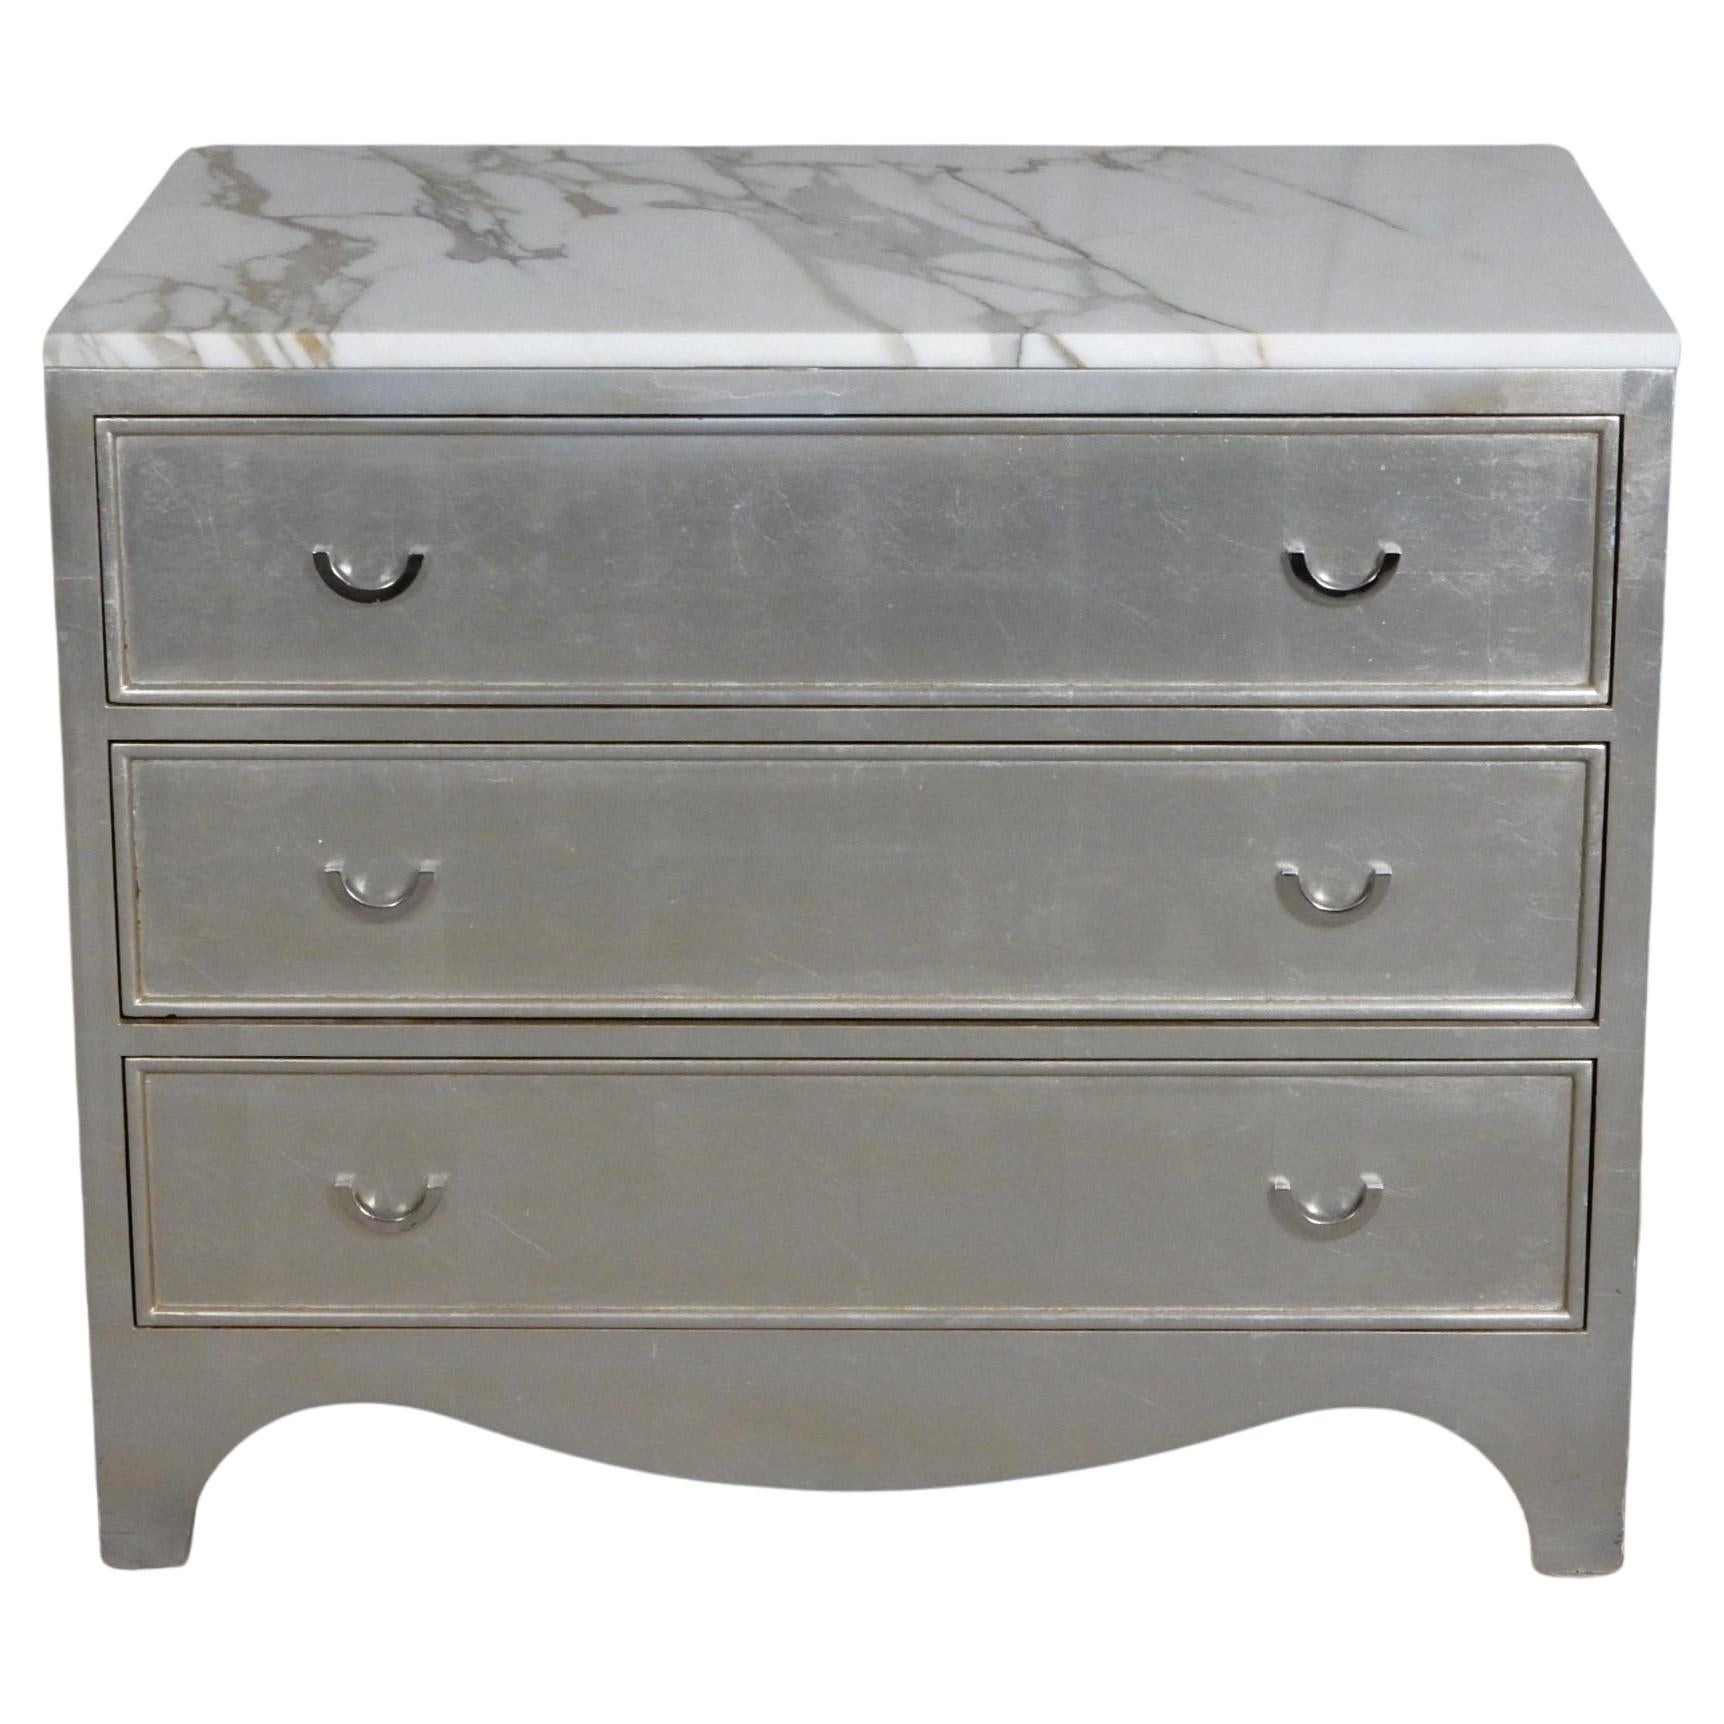 Nancy Corzine design 3 drawer nite chest with 